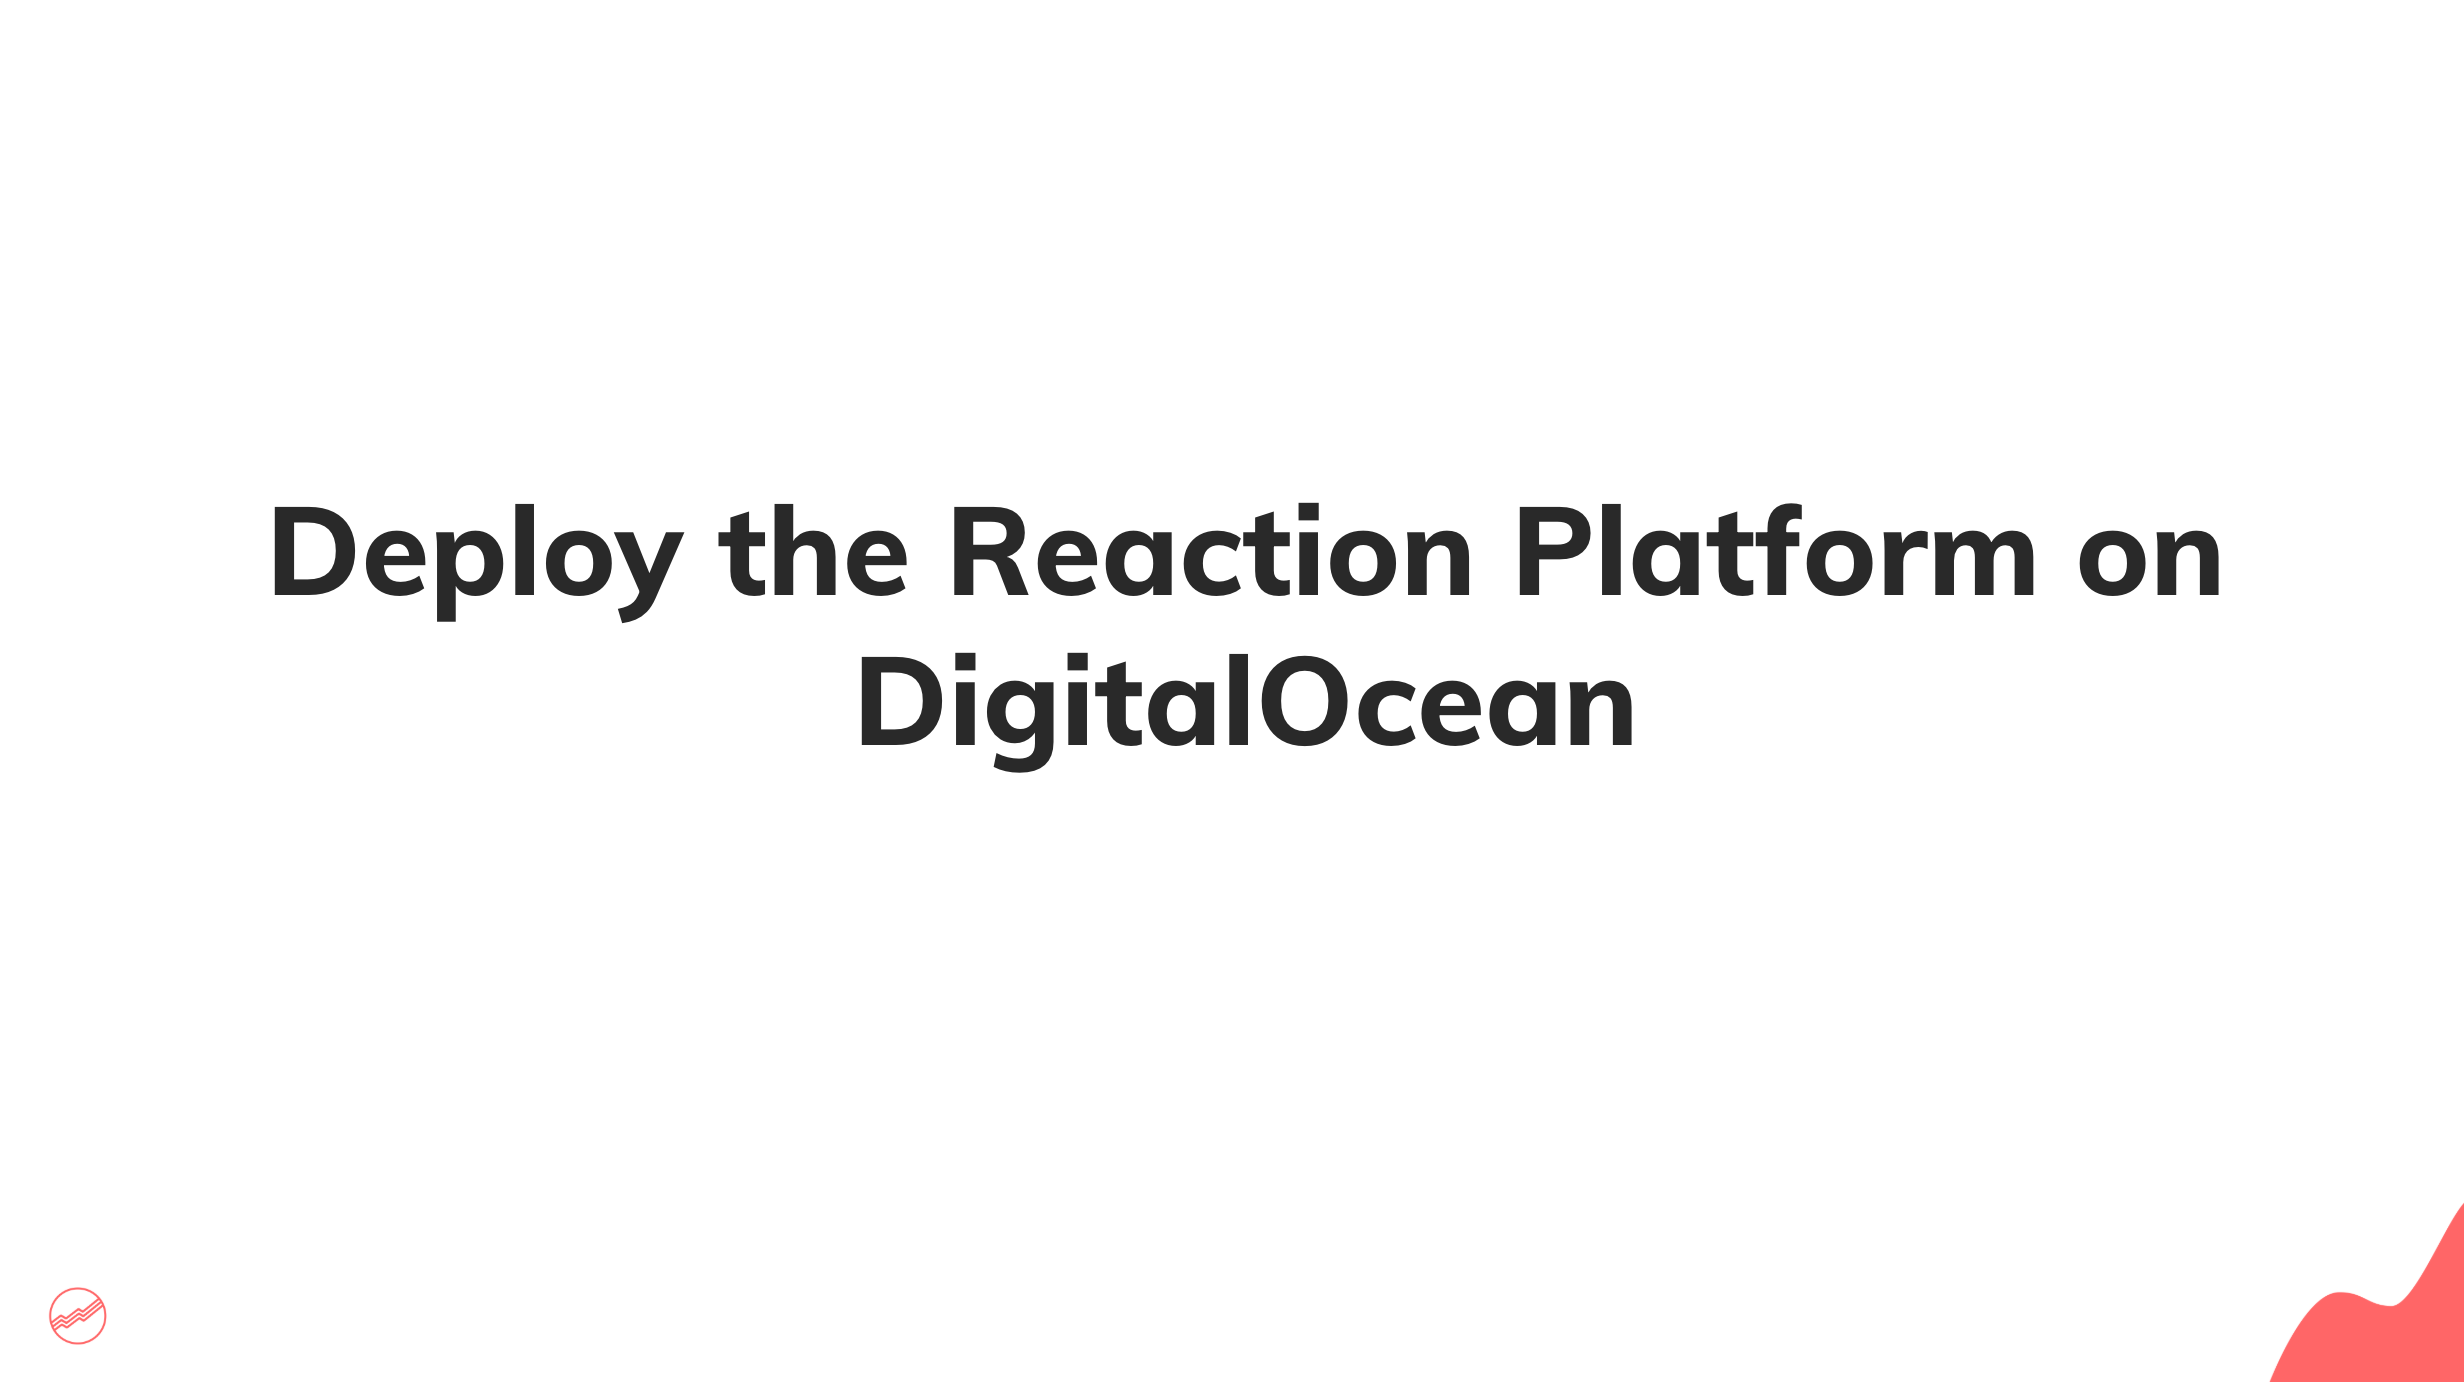 Deploy the Reaction Platform on DigitalOcean